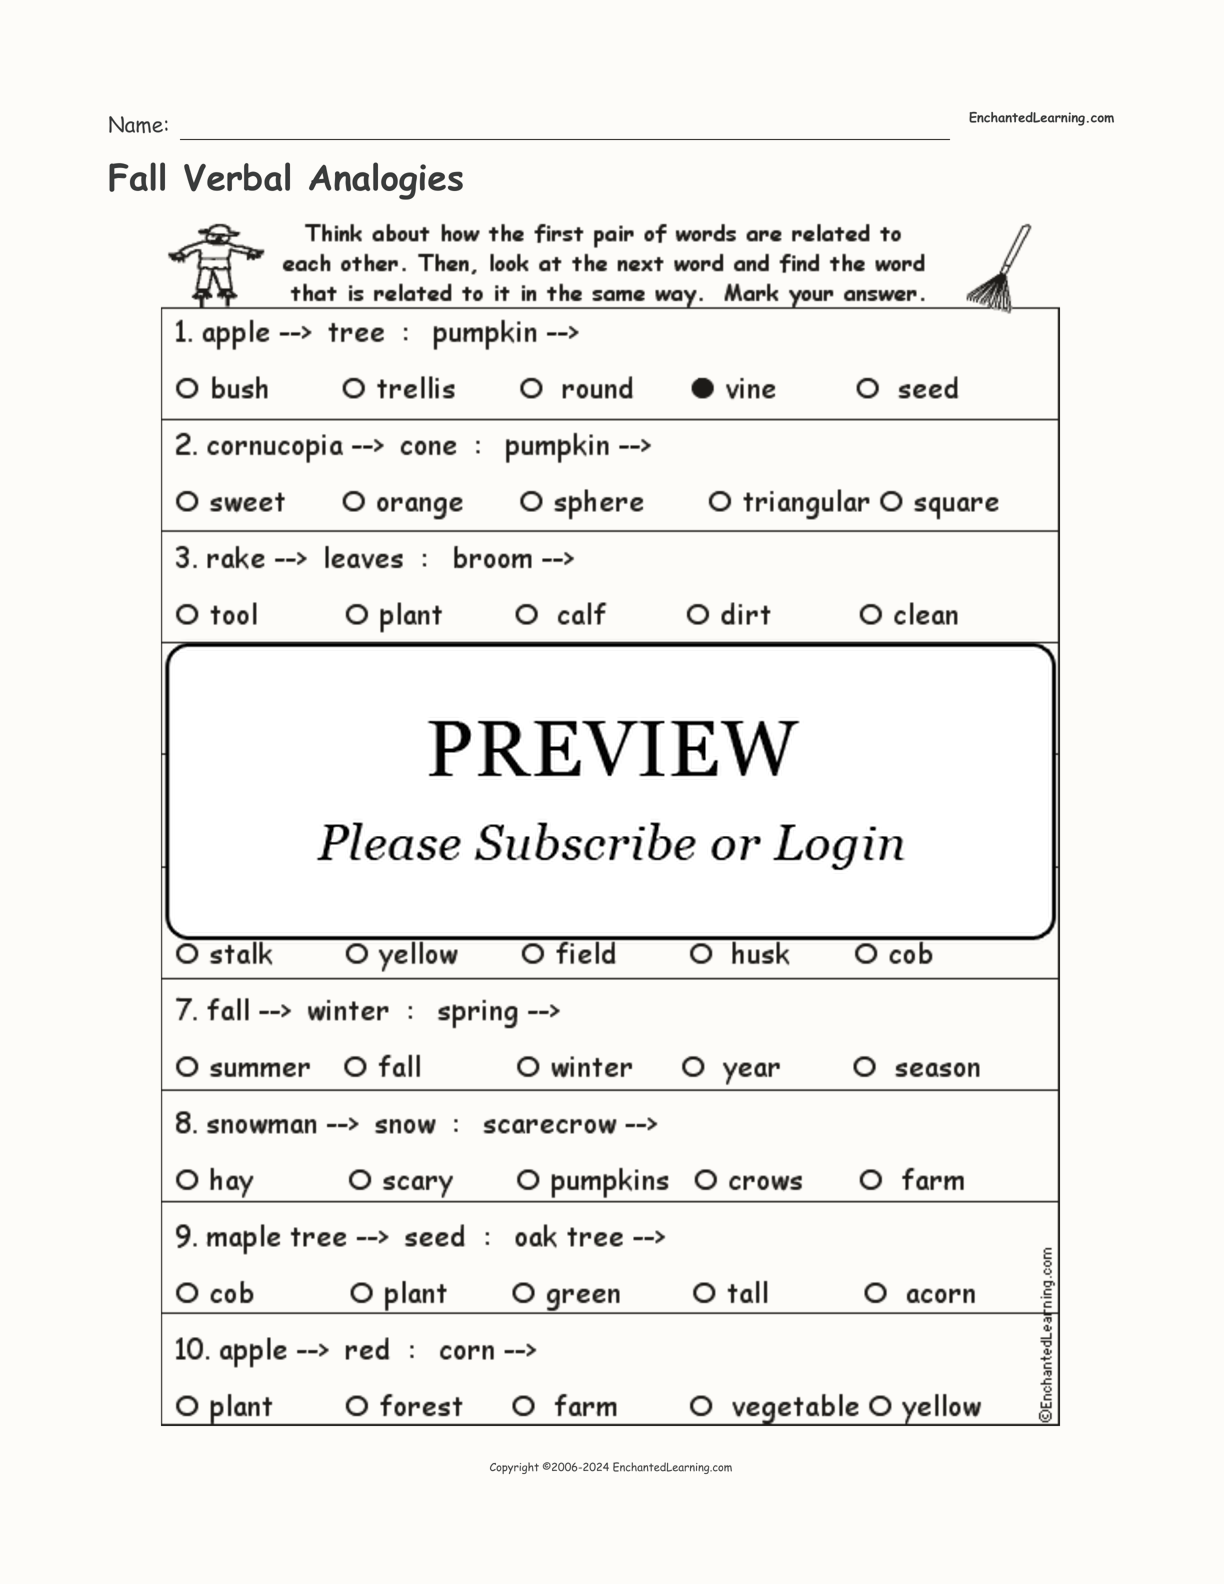 Fall Verbal Analogies interactive worksheet page 1